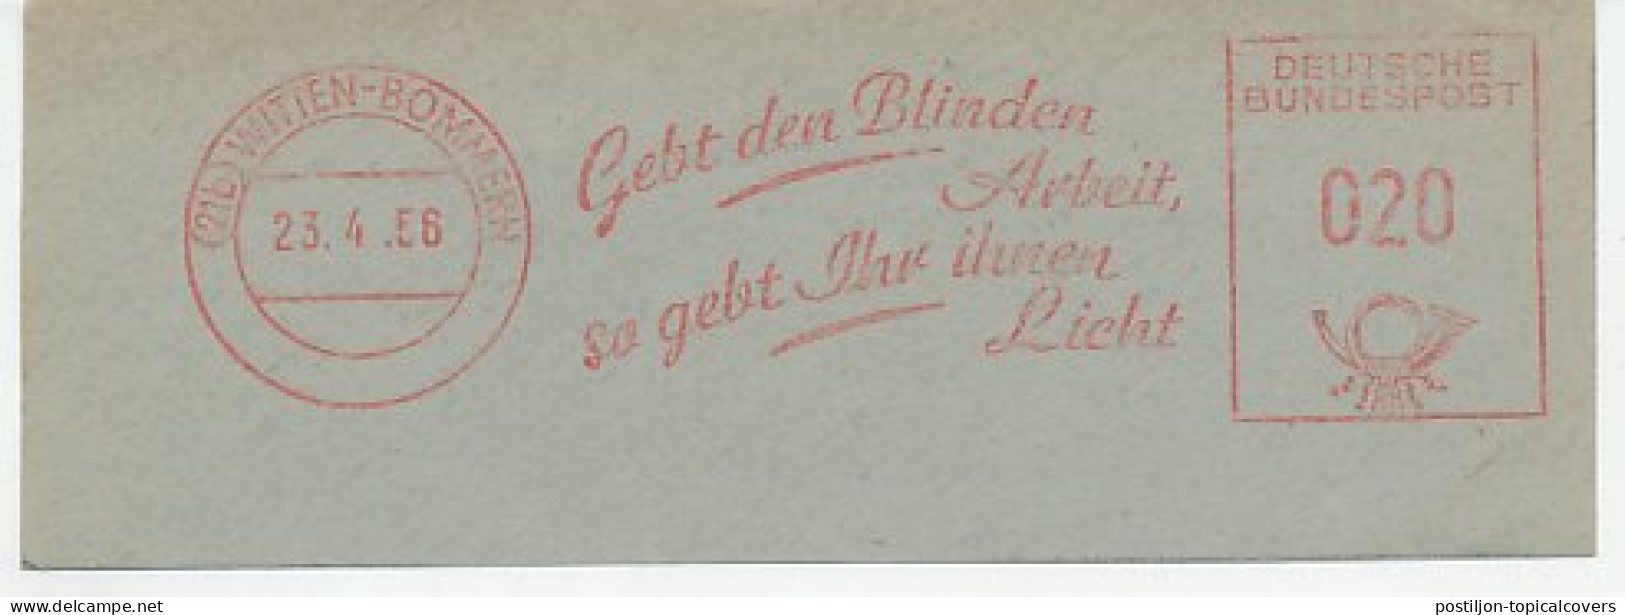 Meter Cut Germany 1956 Blind - Work - Light - Handicaps